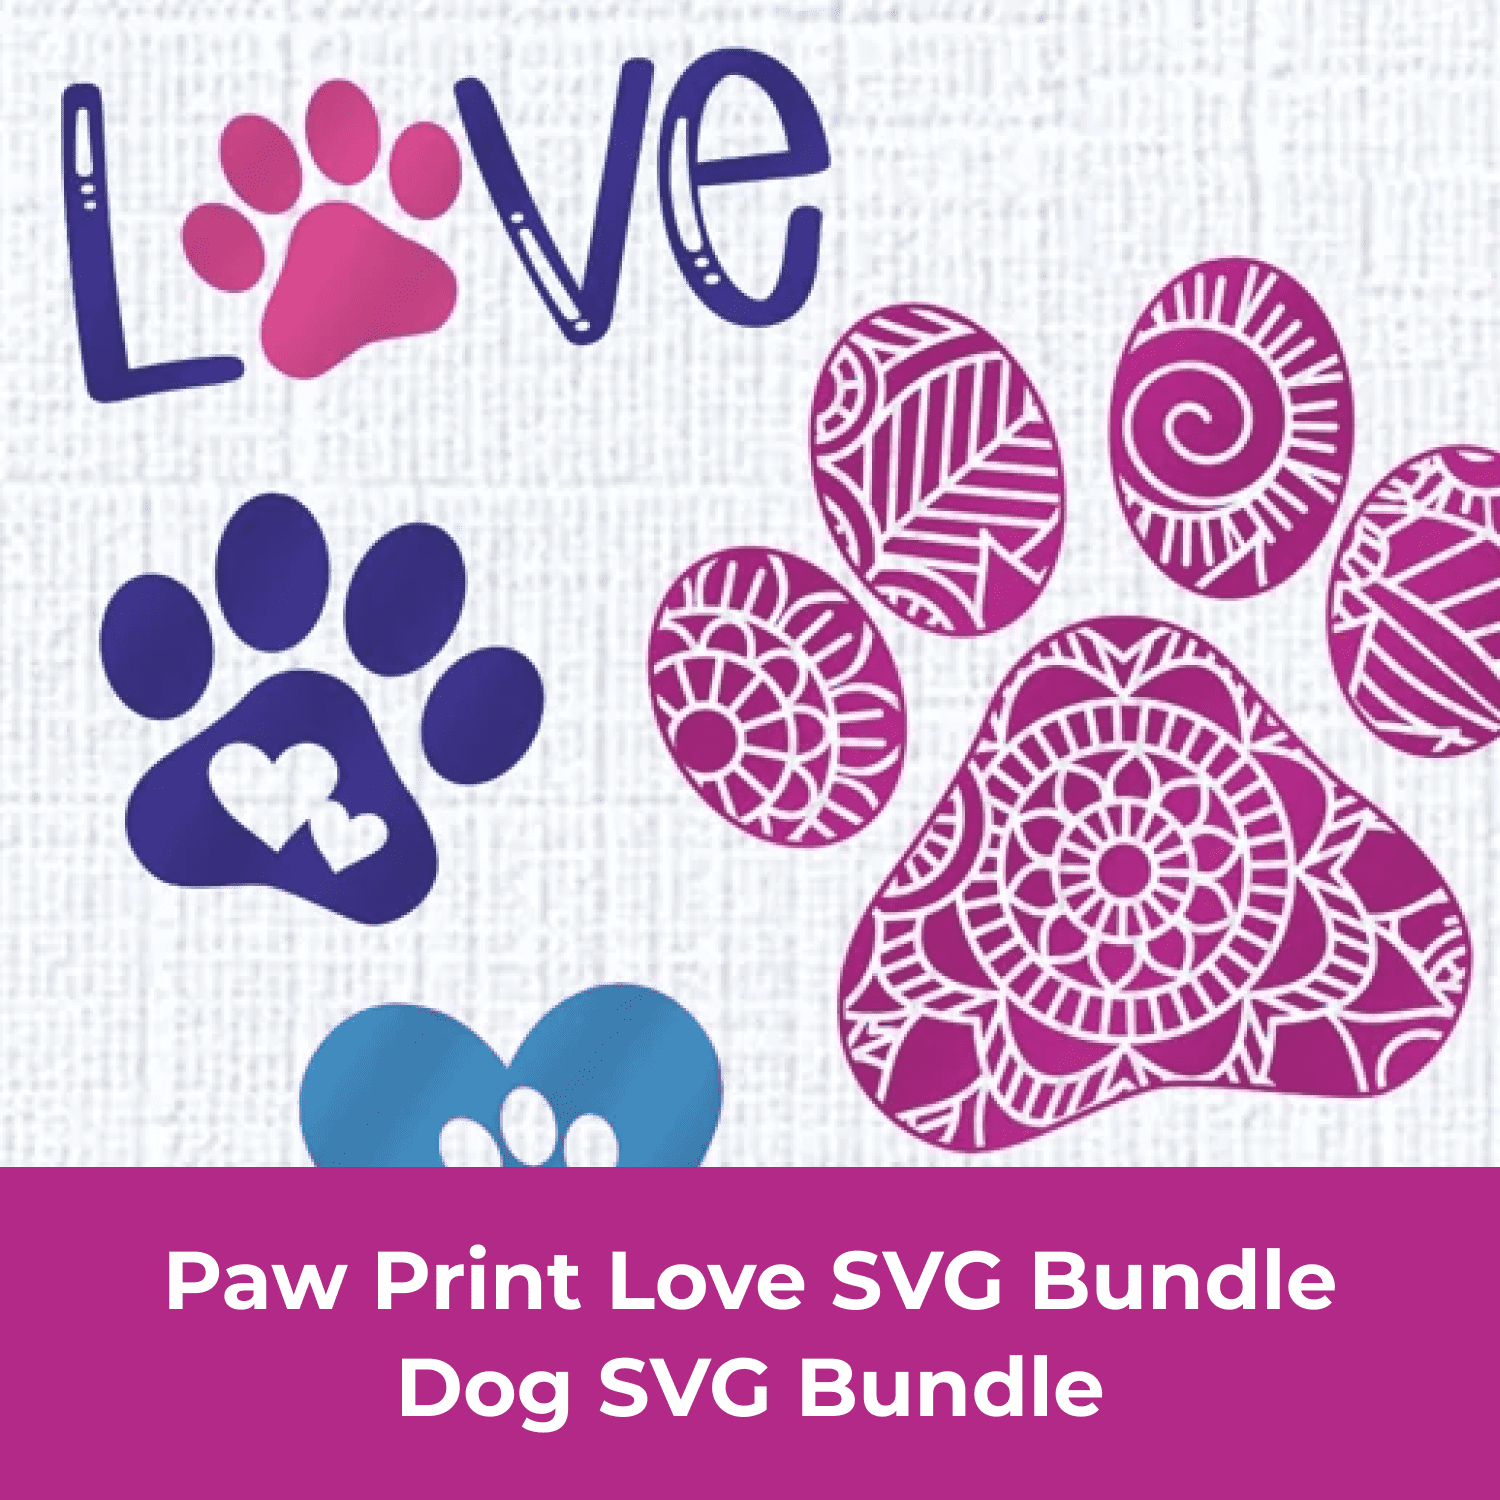 The paw print love svg bundle.